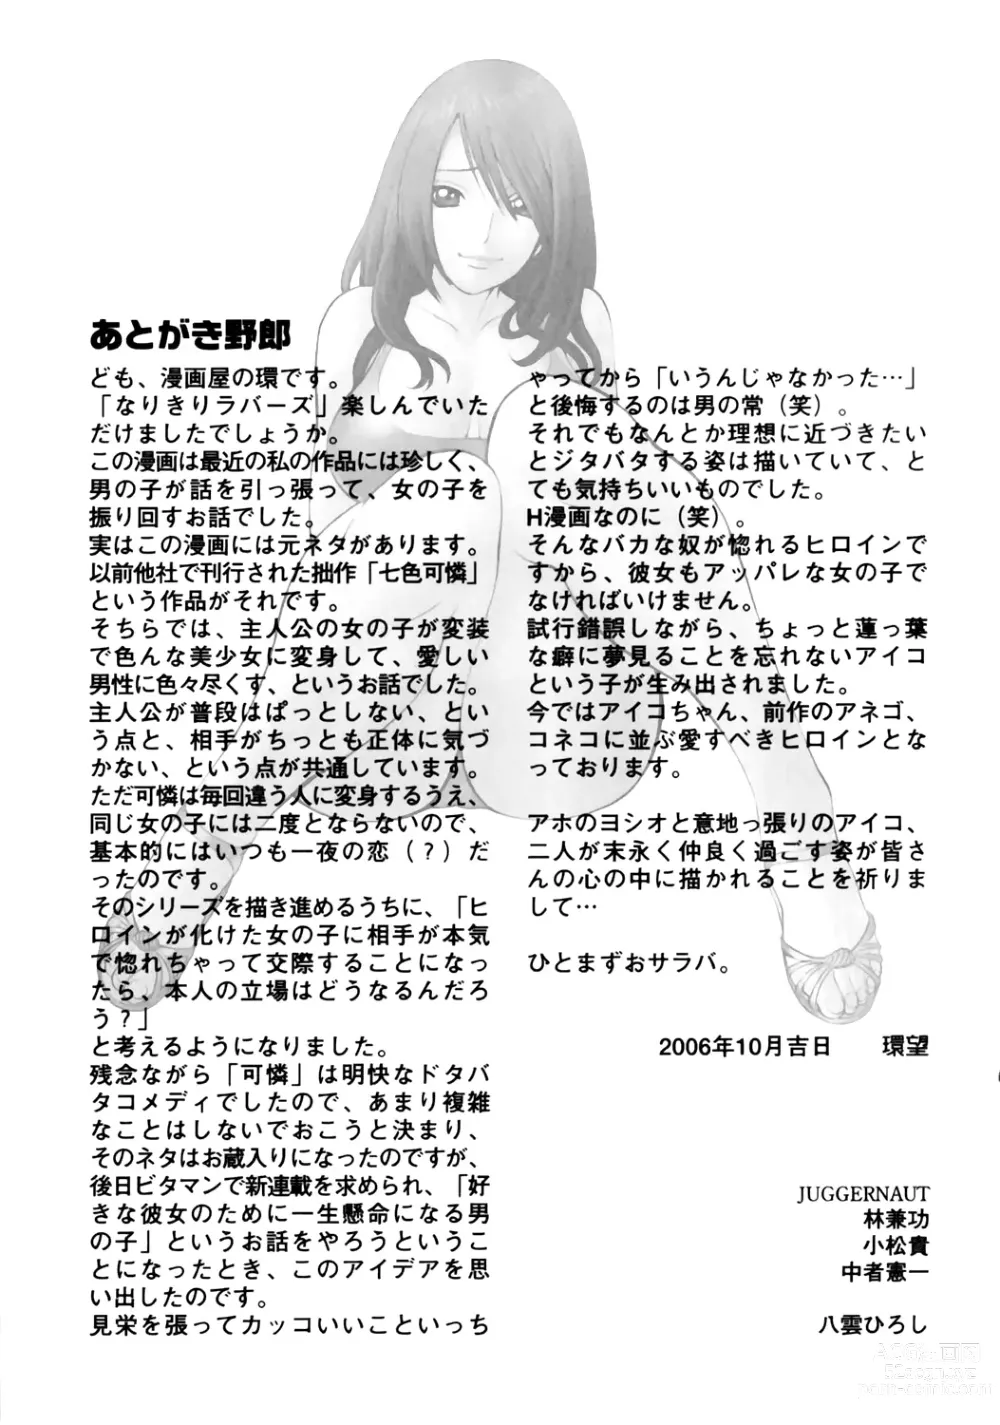 Page 227 of manga Narikiri Lovers